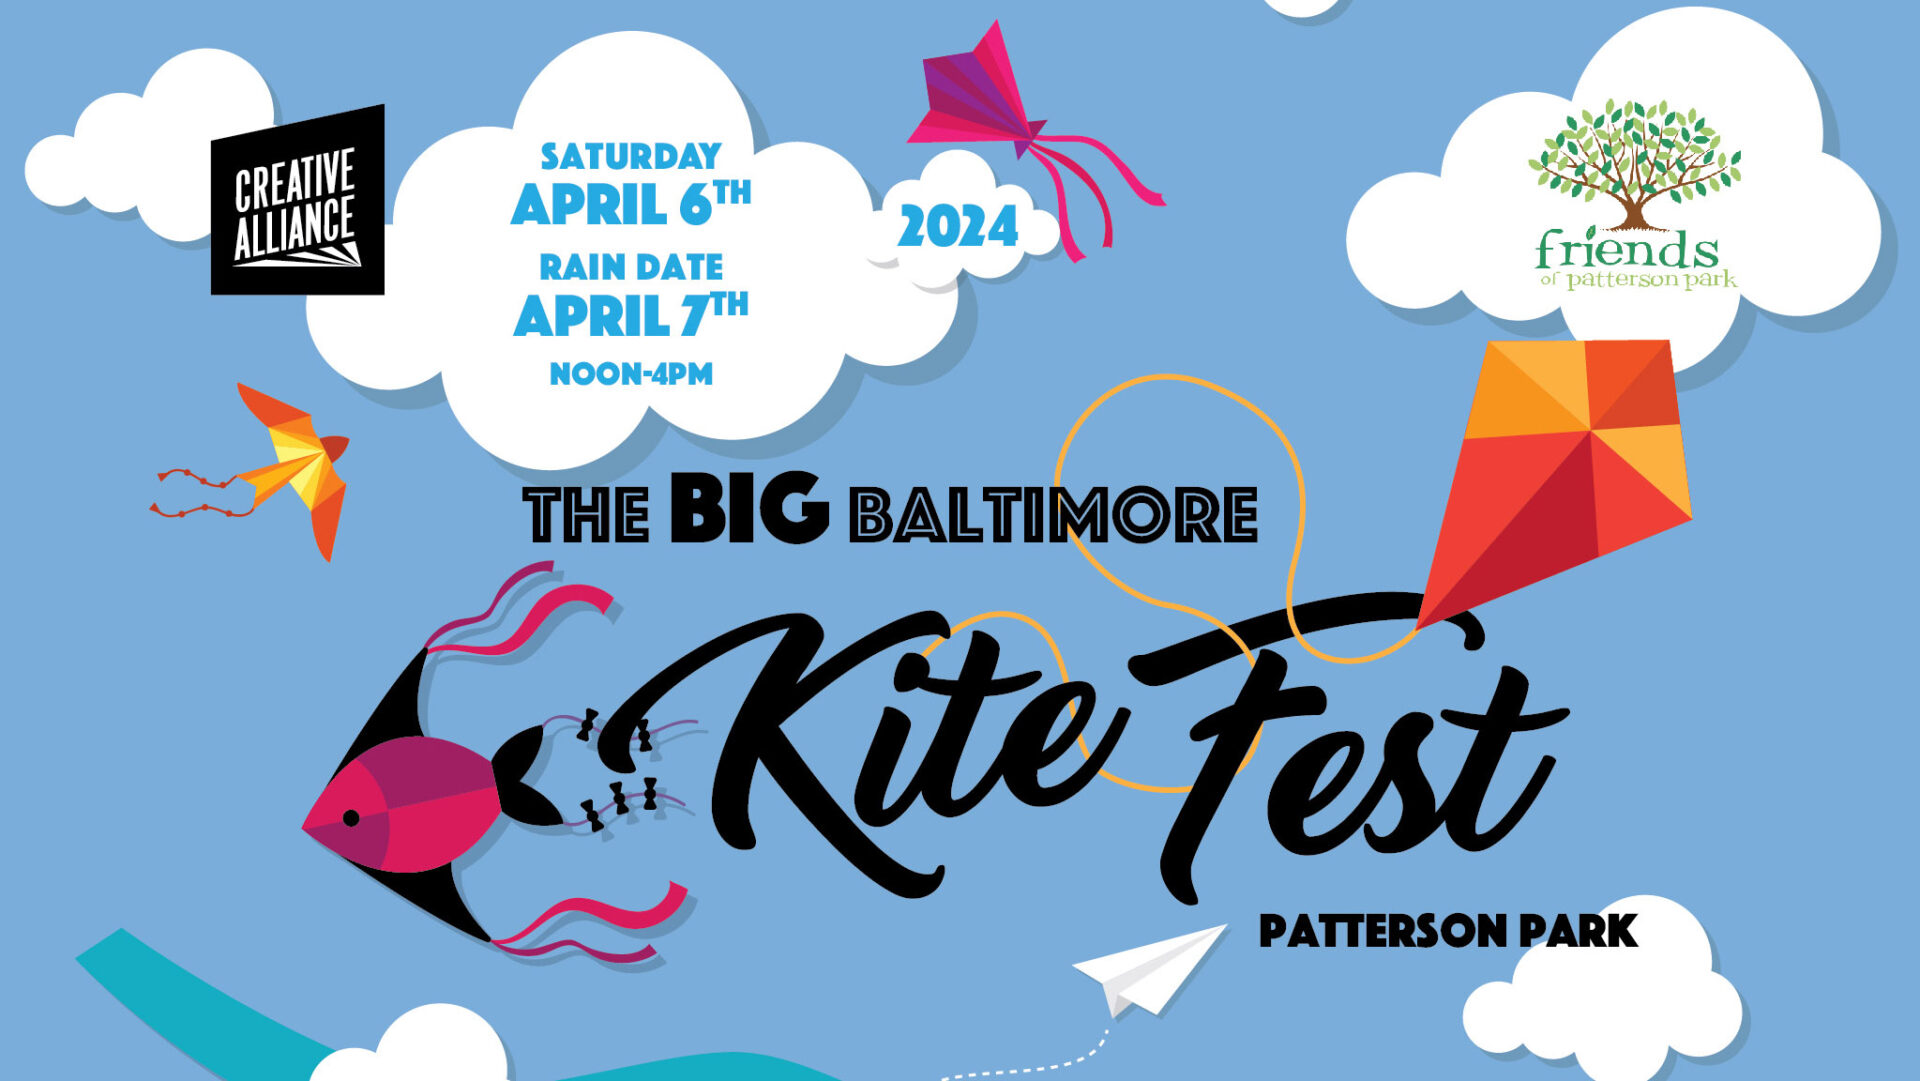 2024 BIG Baltimore Kite Fest in Patterson Park